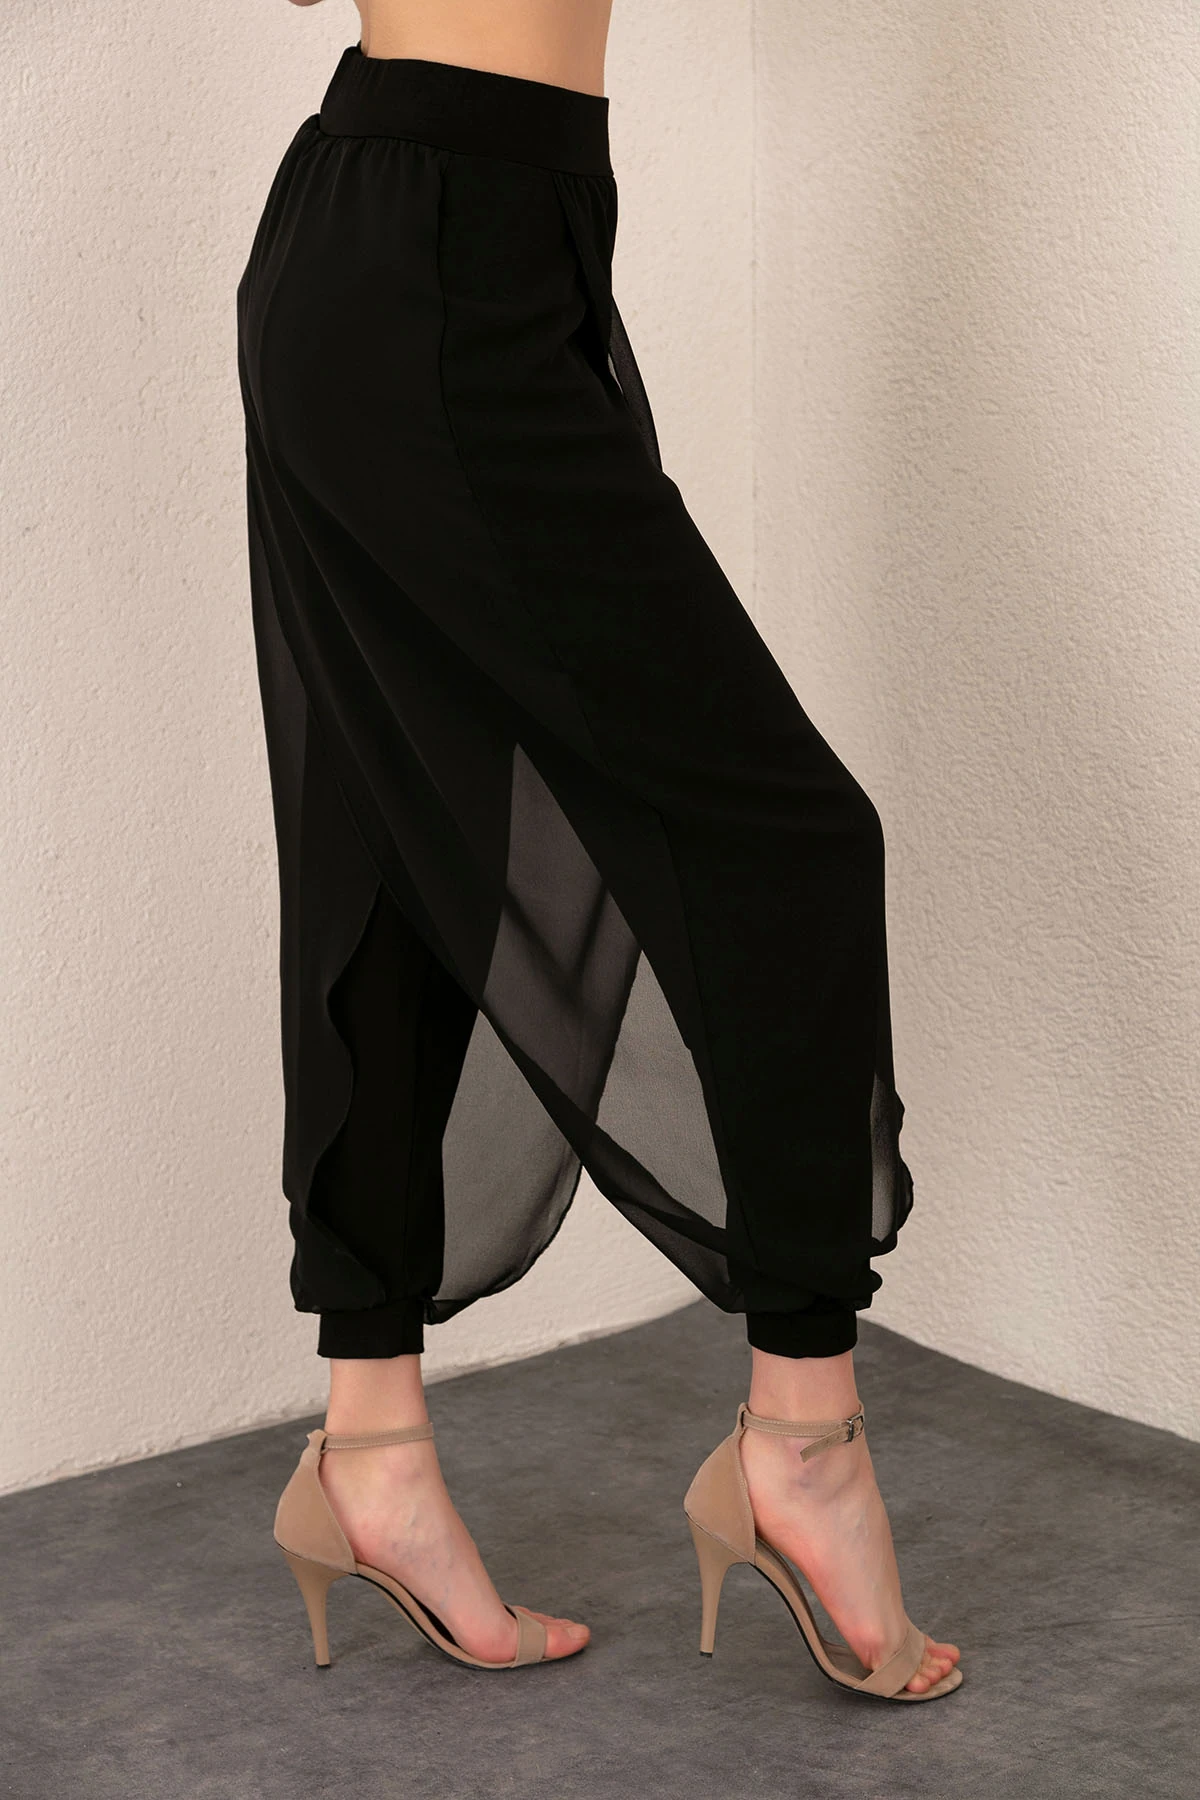 Kadın Siyah Şifon Detaylı Paçası Lastikli Şalvar Pantolon